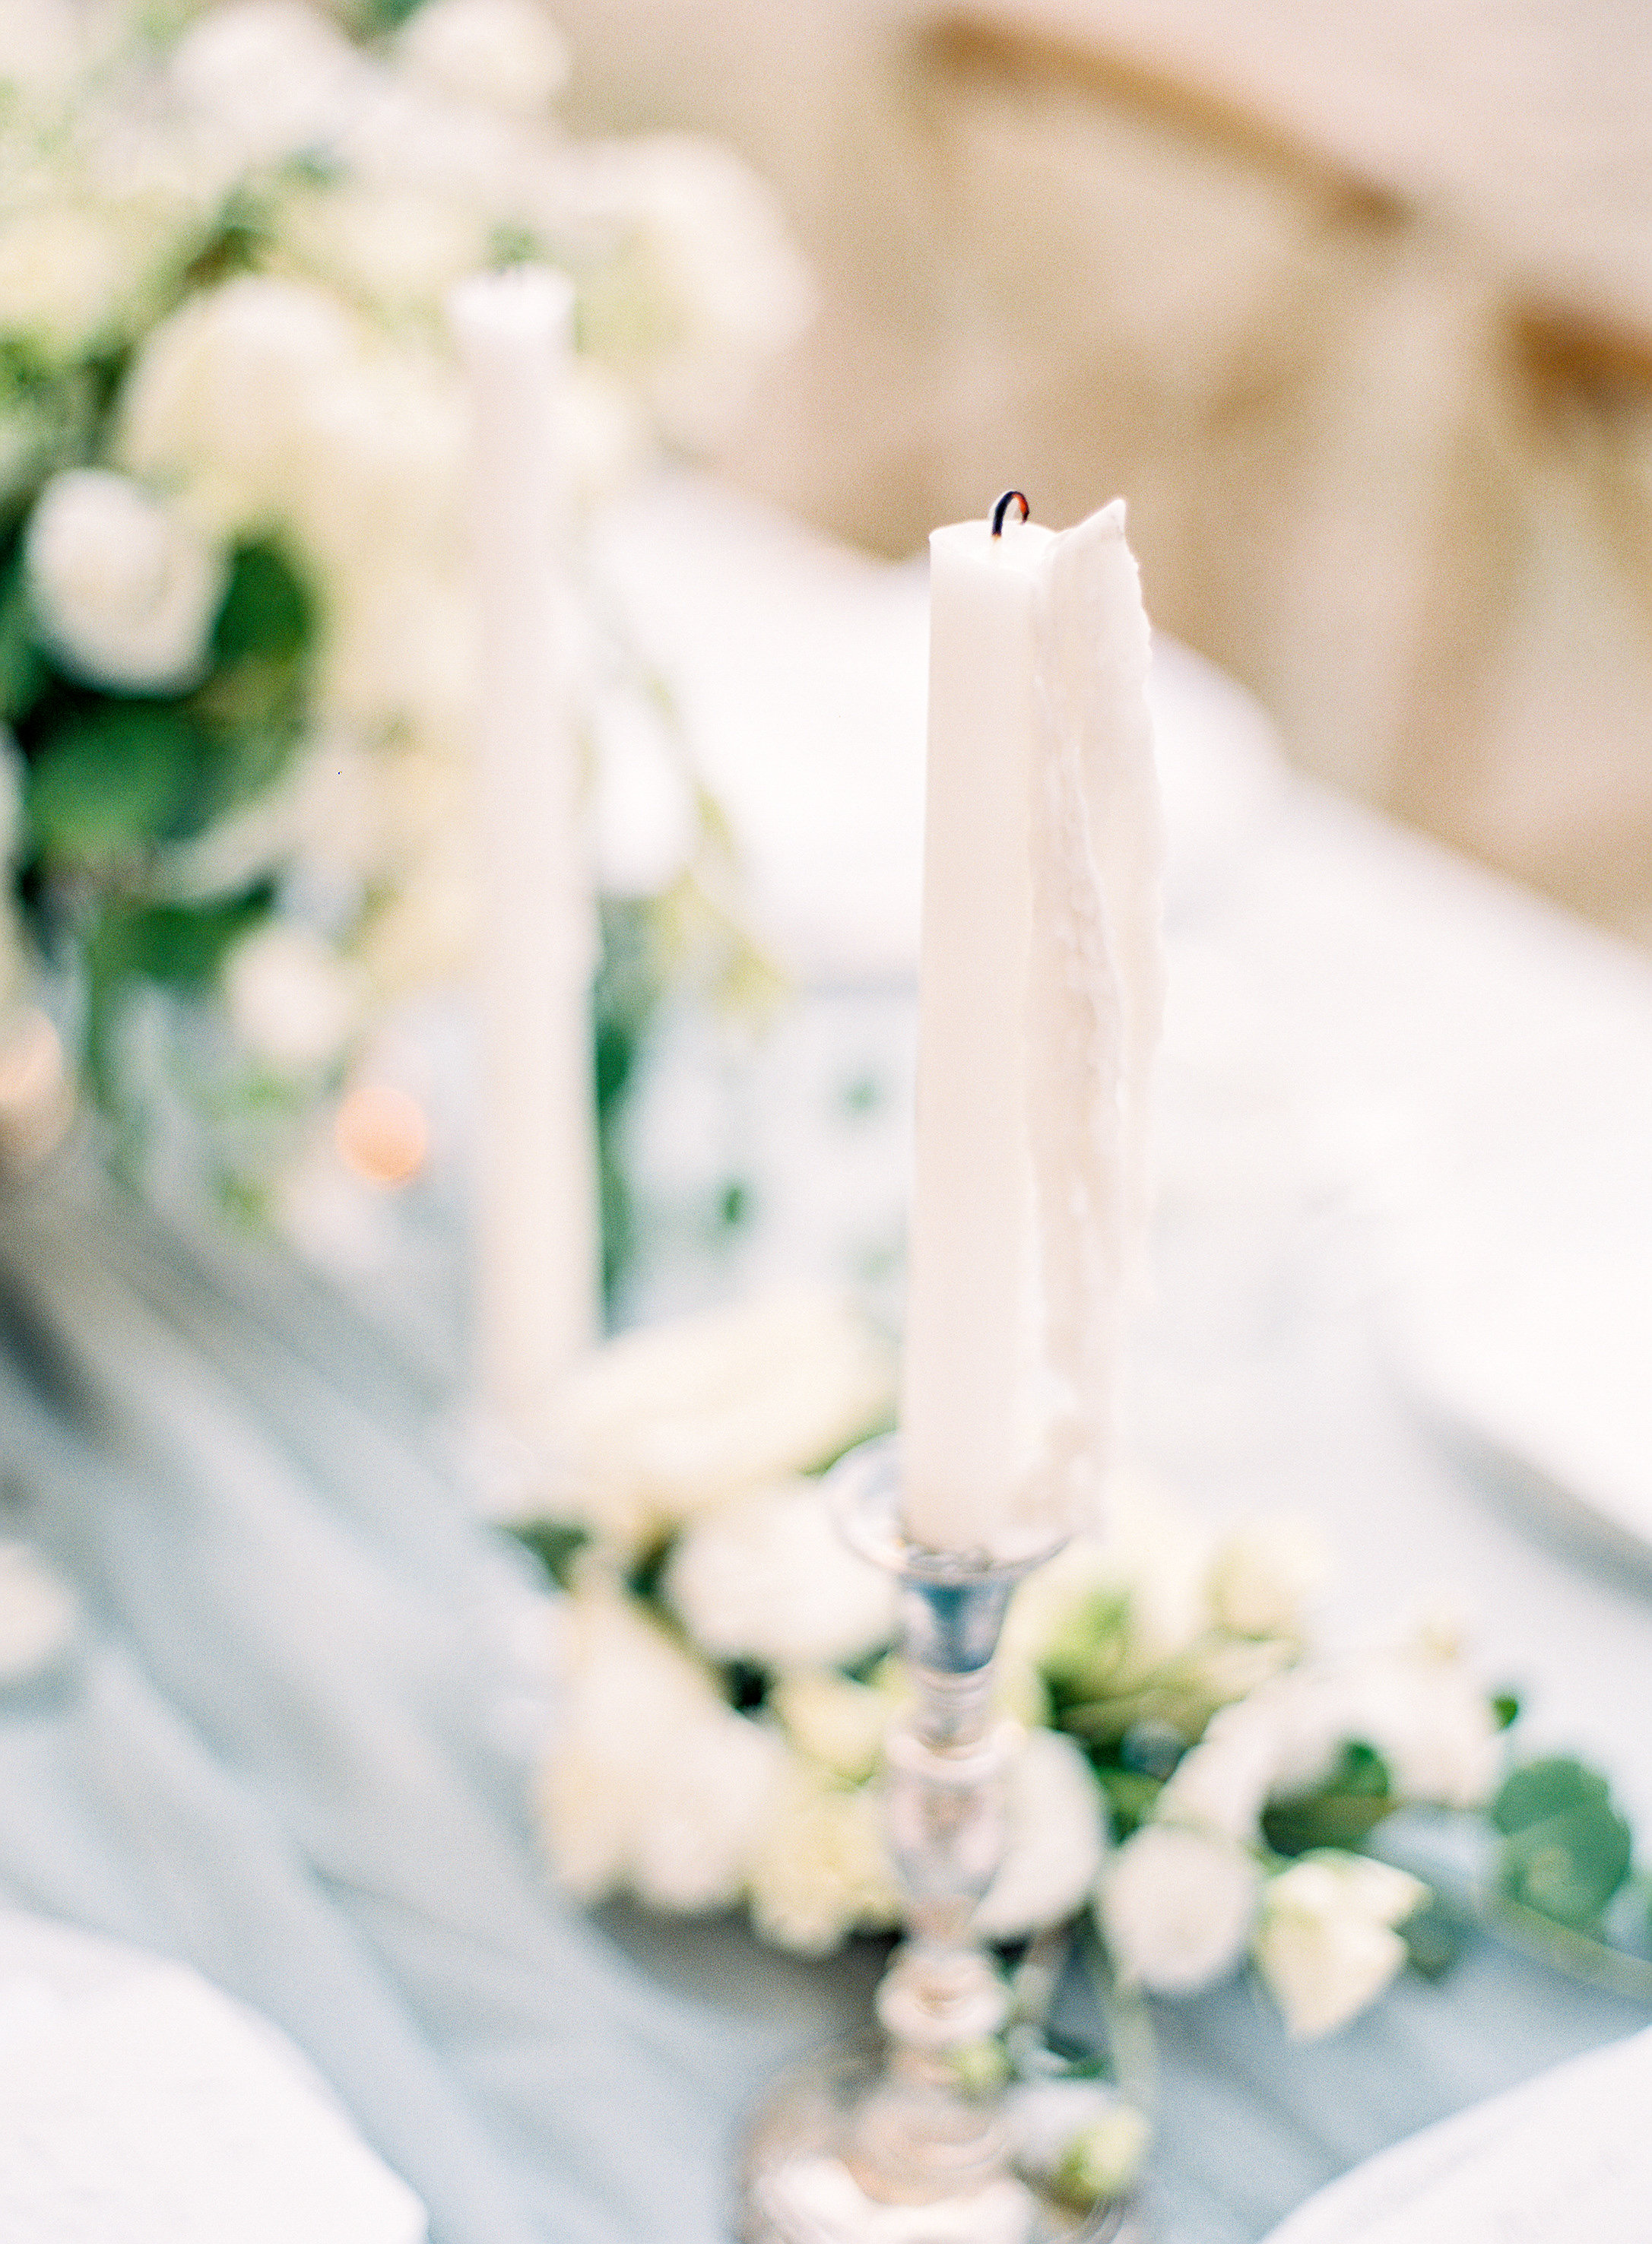 Candlesticks at Wedding